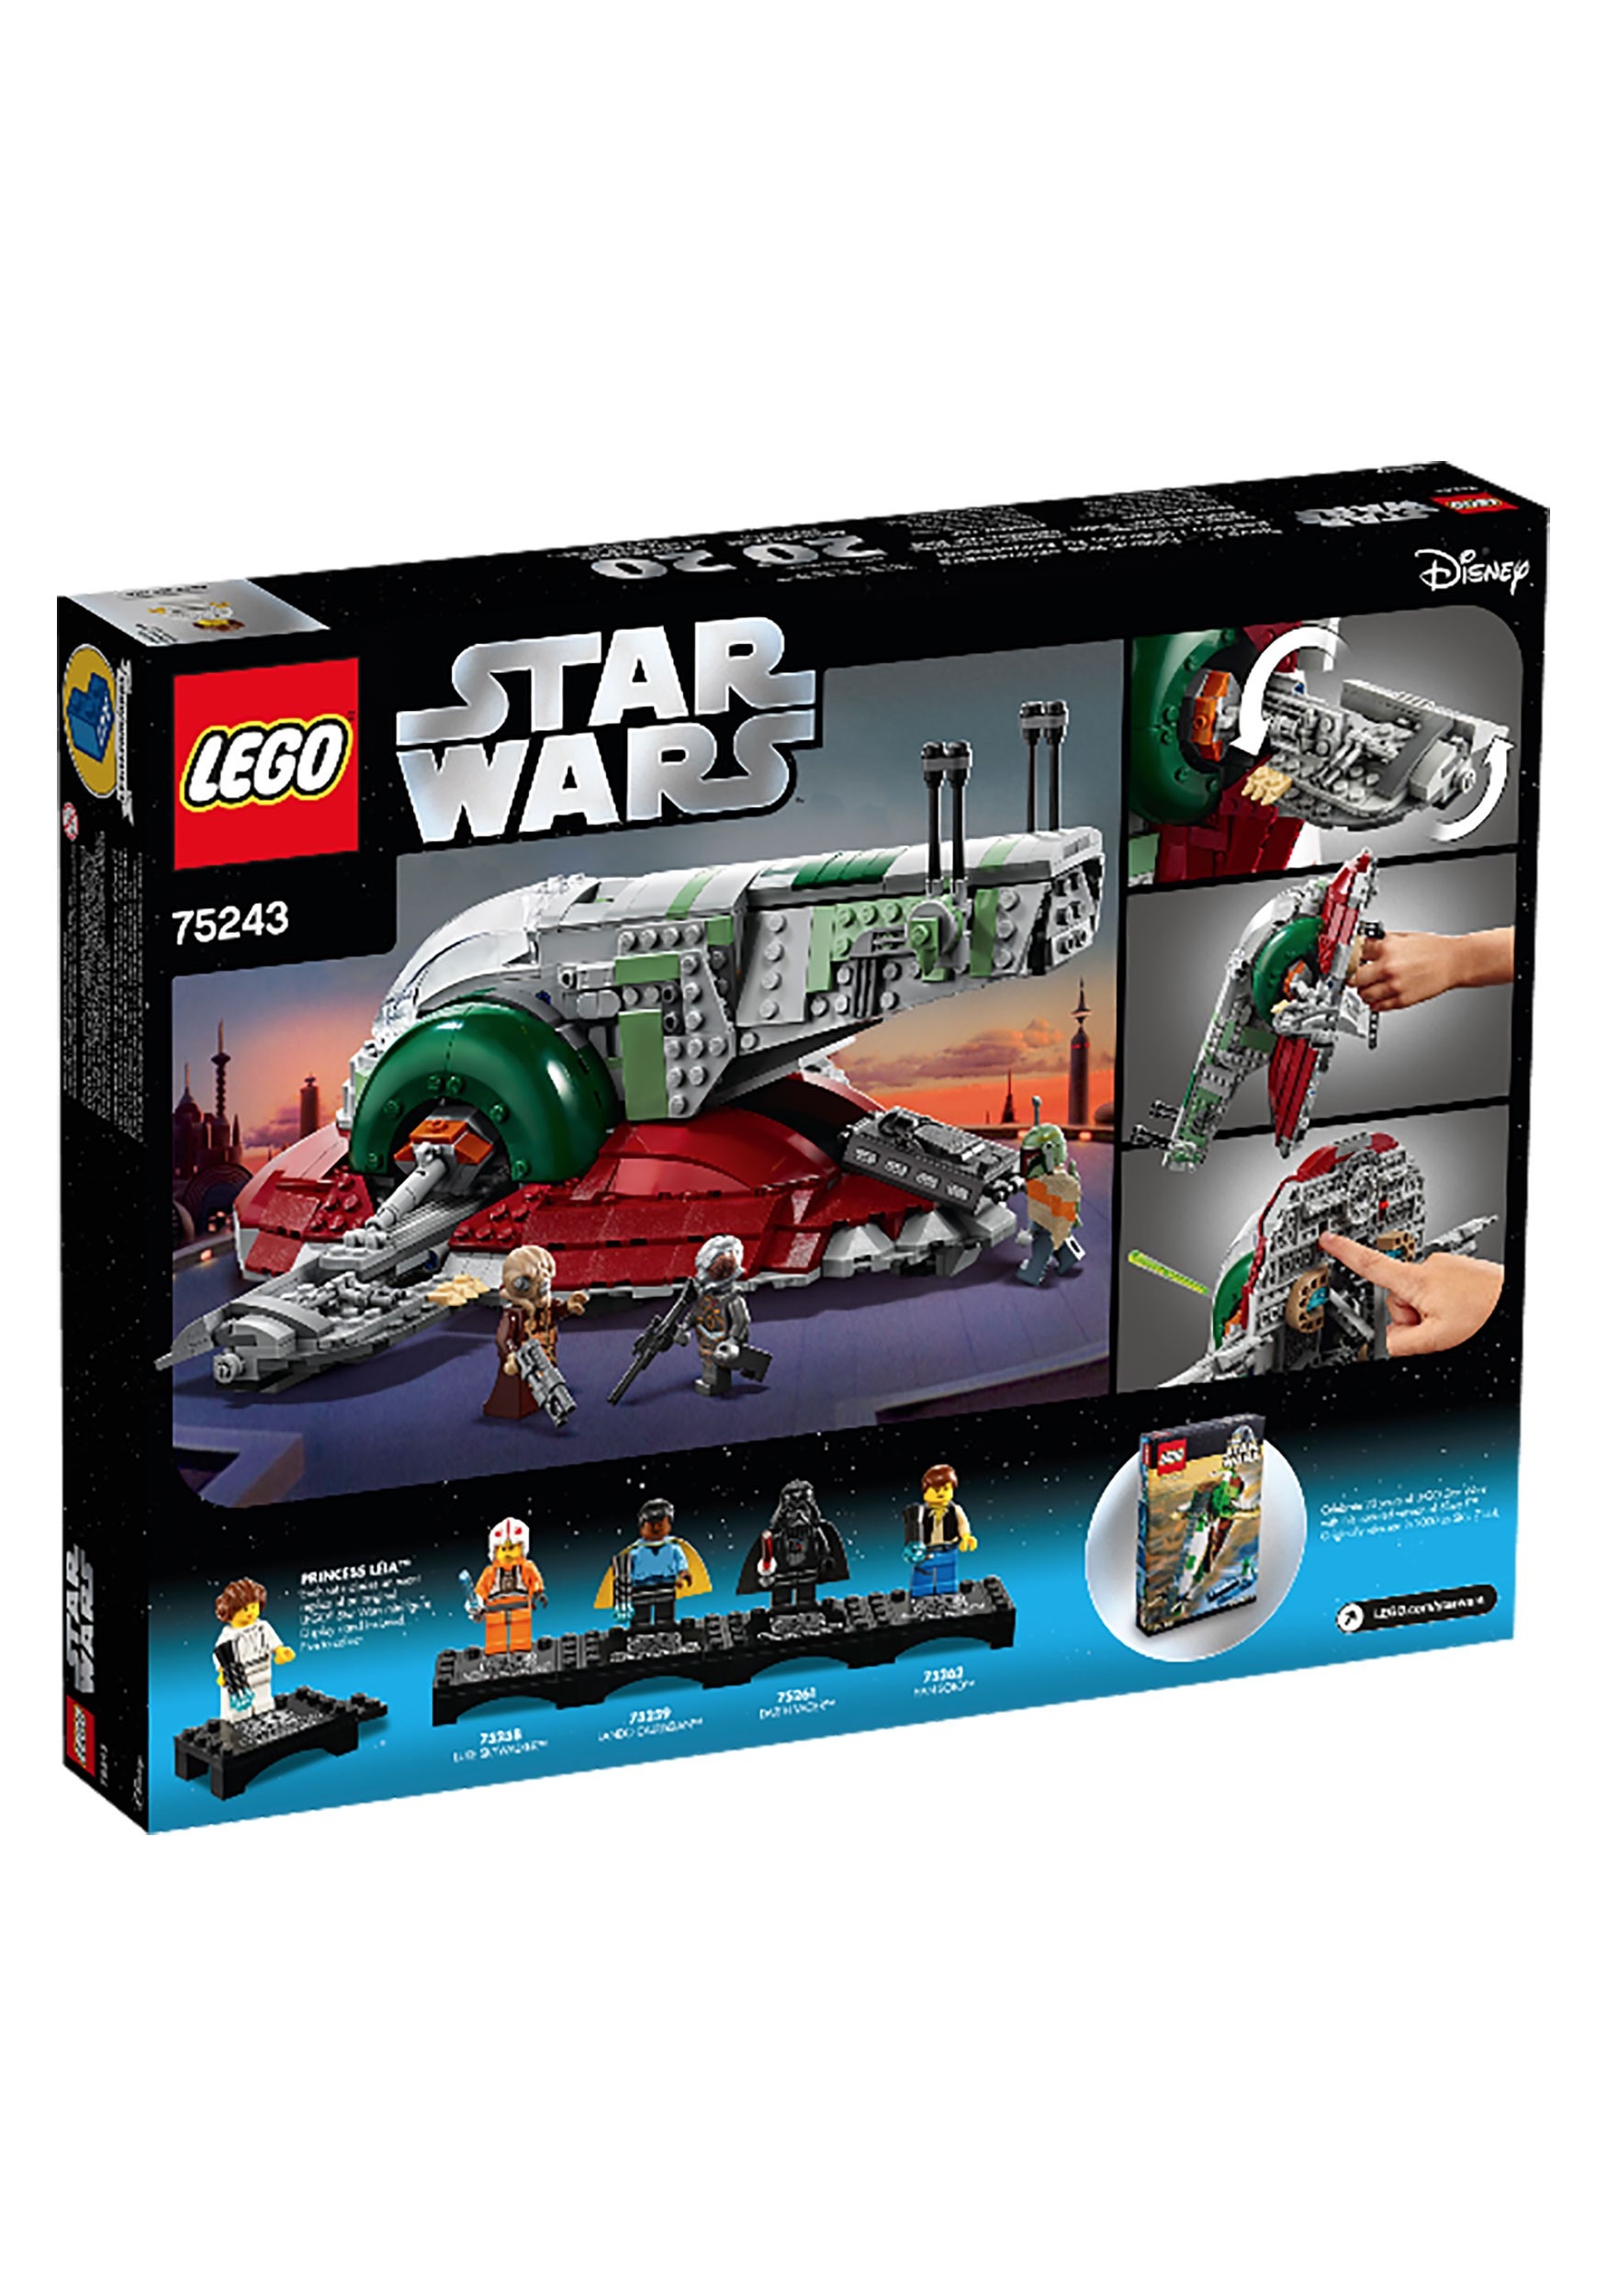 LEGO Slave 1 20th Anniversary Edition Star Wars Building Set